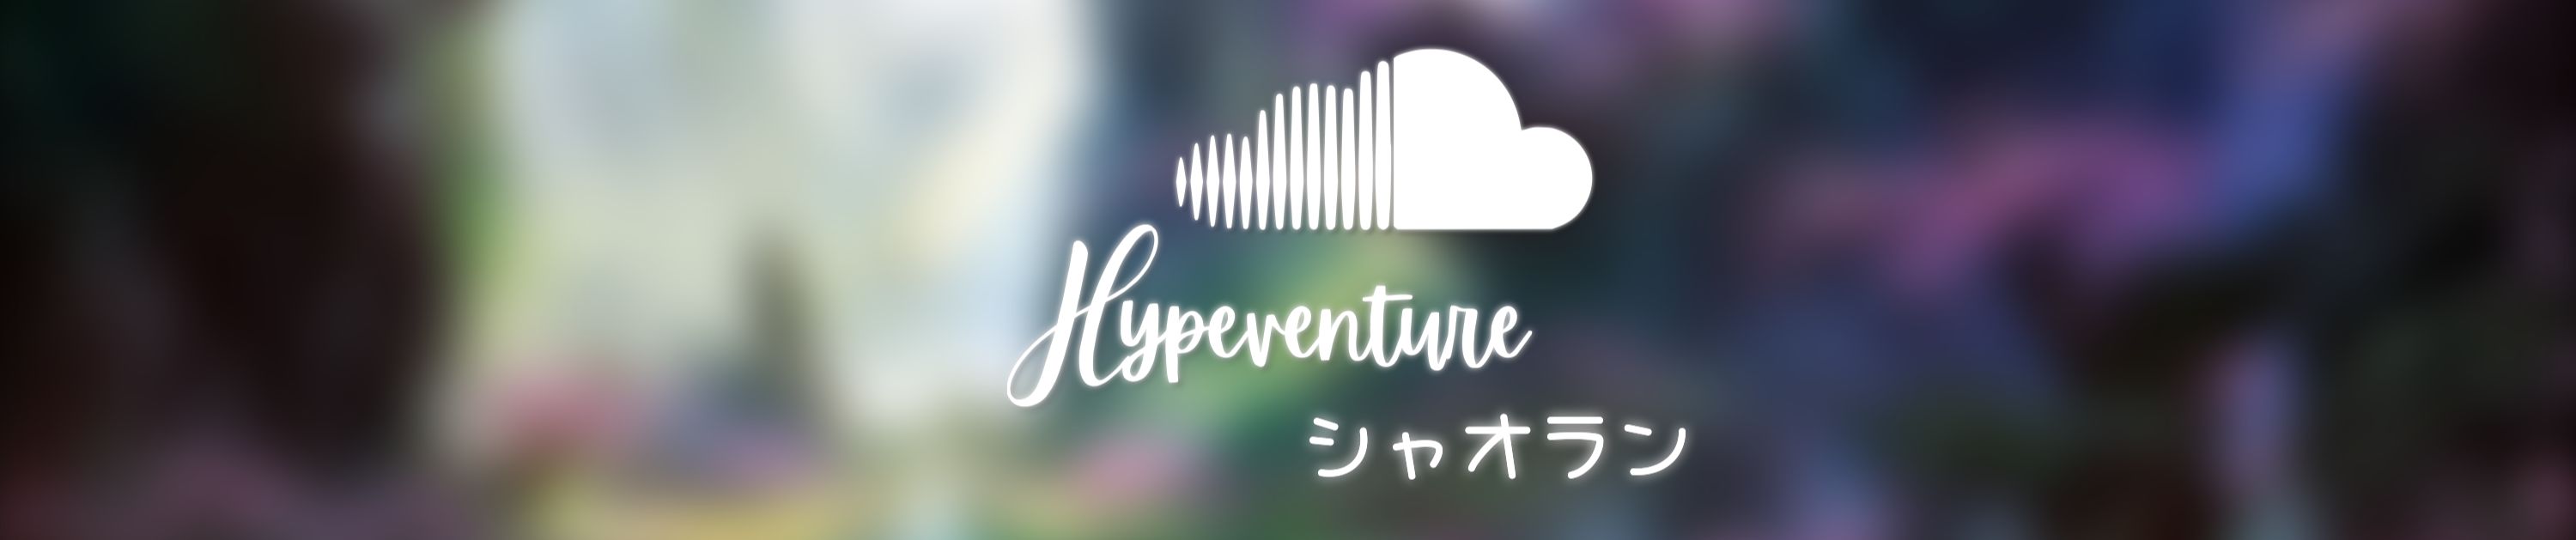 Stream Fairy Tail (Radio Edit) by Hypeventure